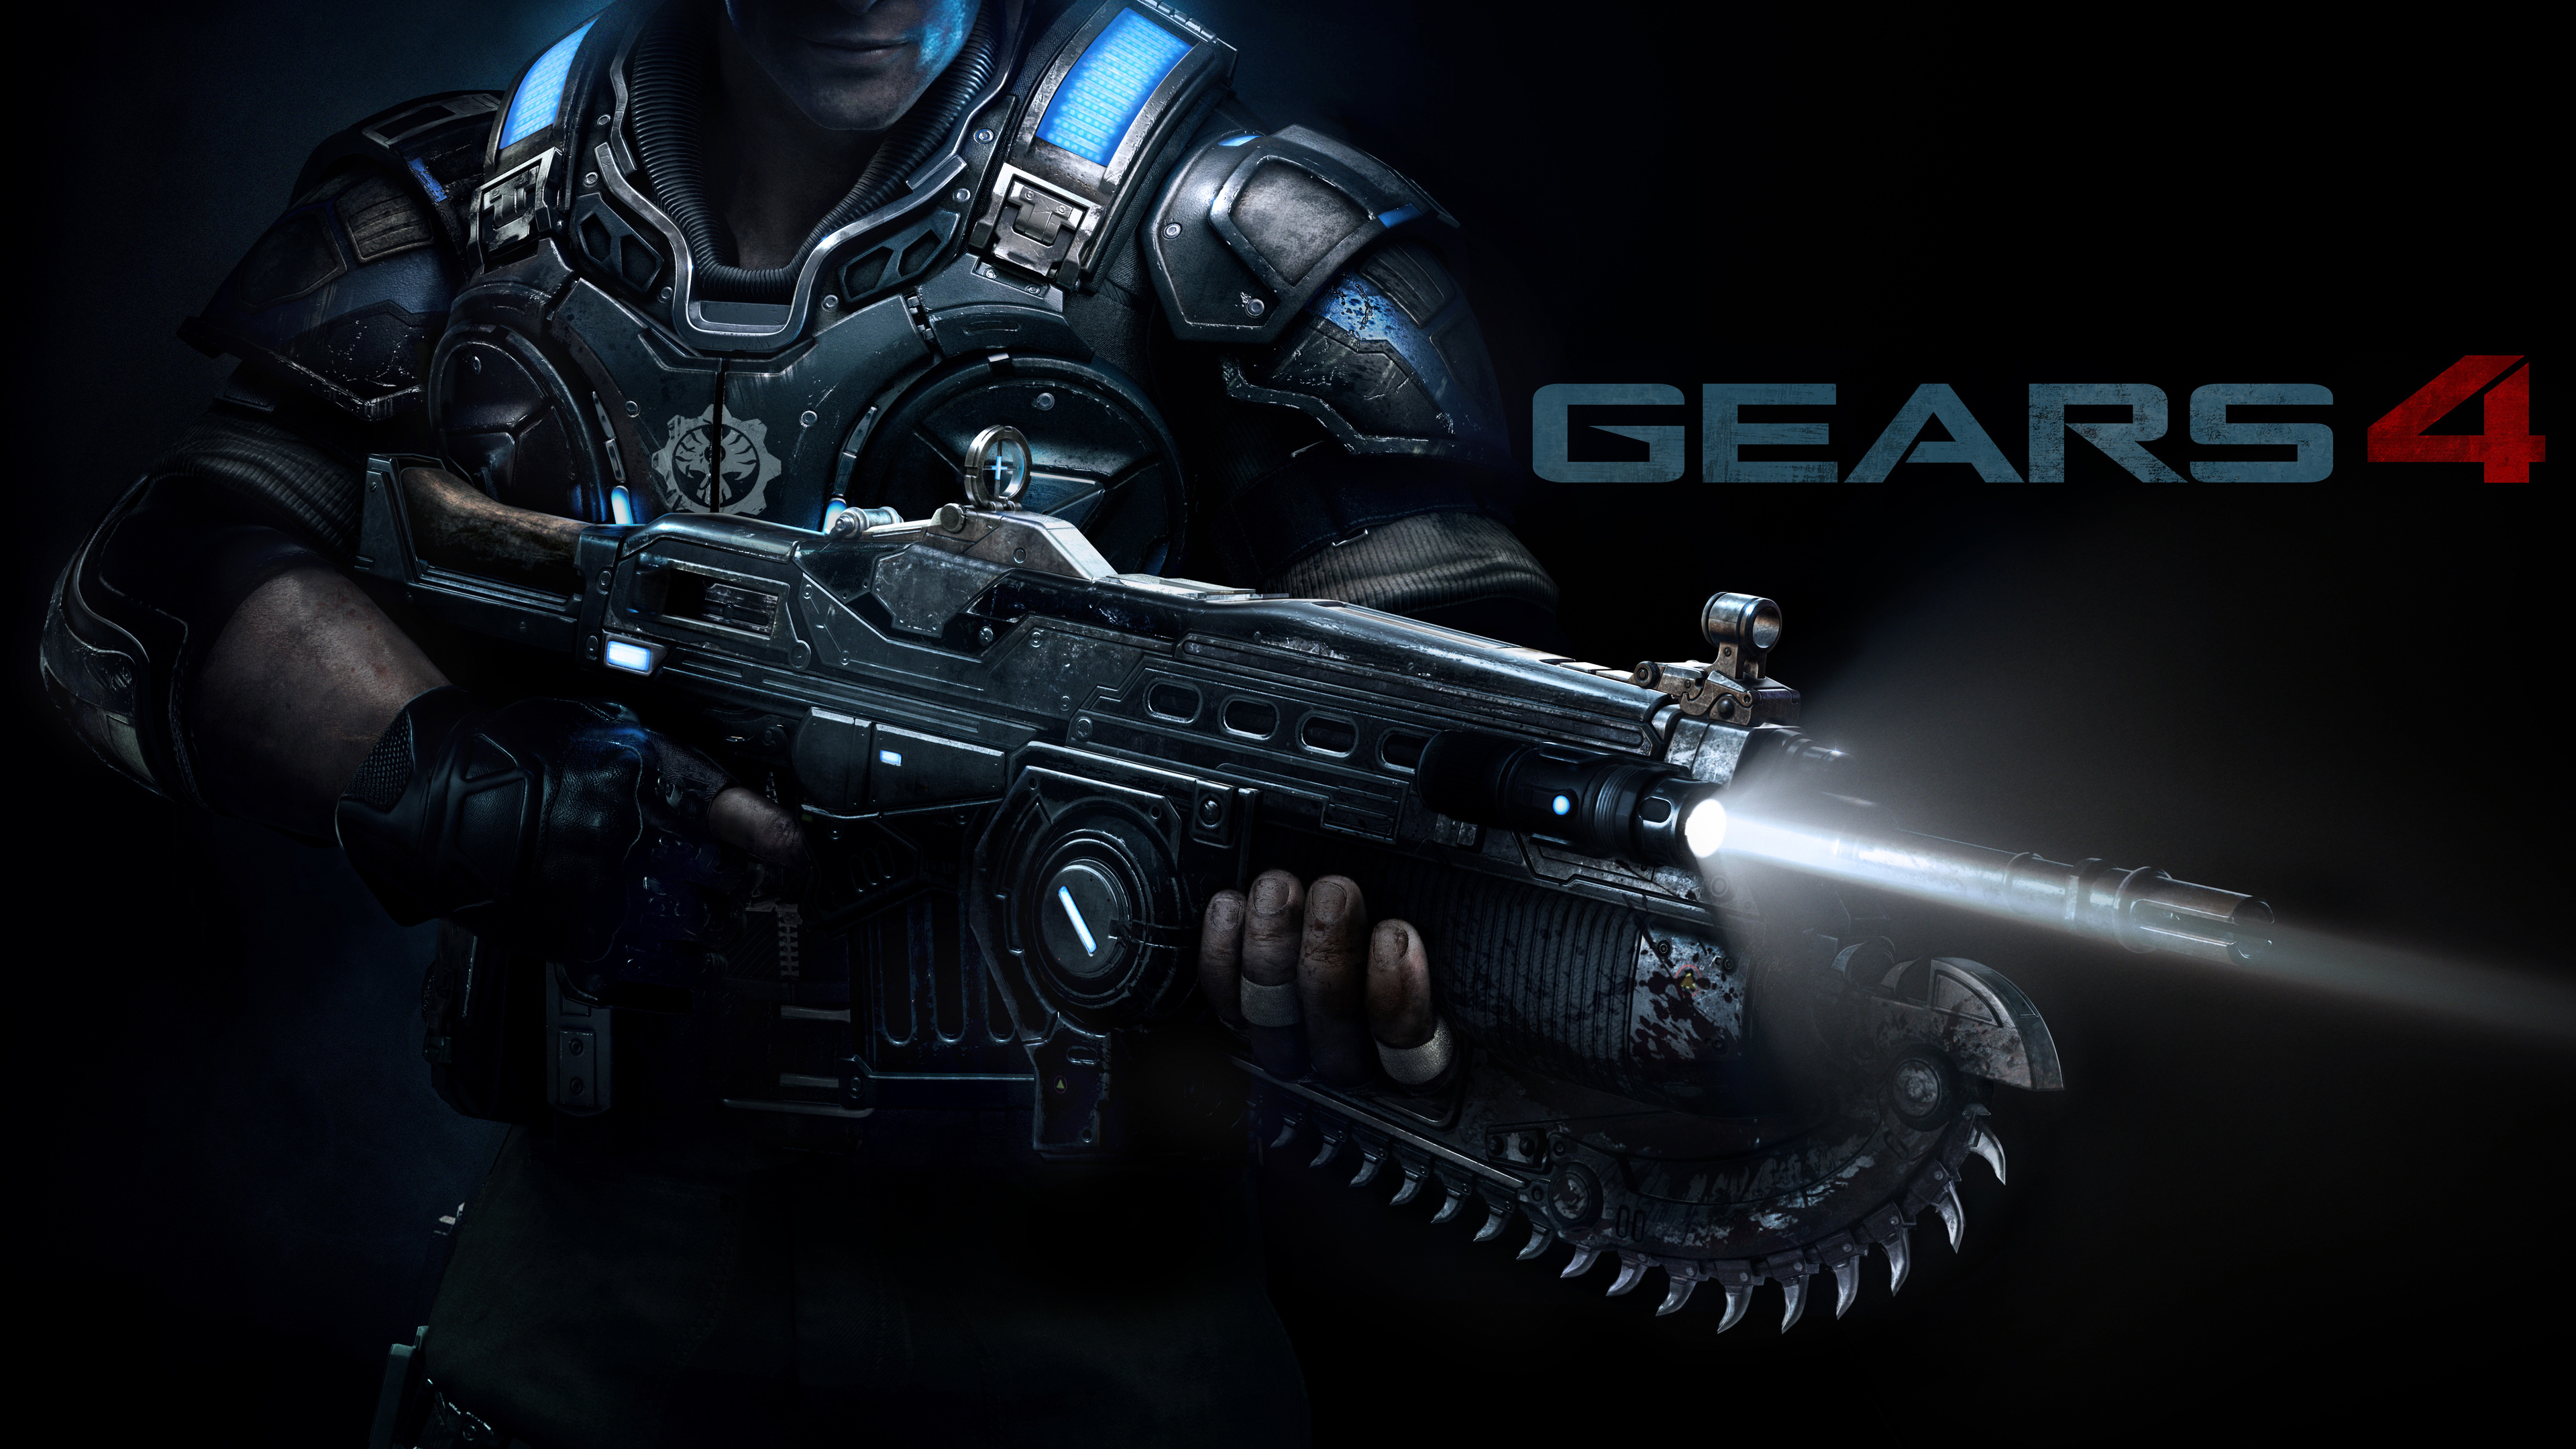 gears of war 4, gears of war, video game lock screen backgrounds